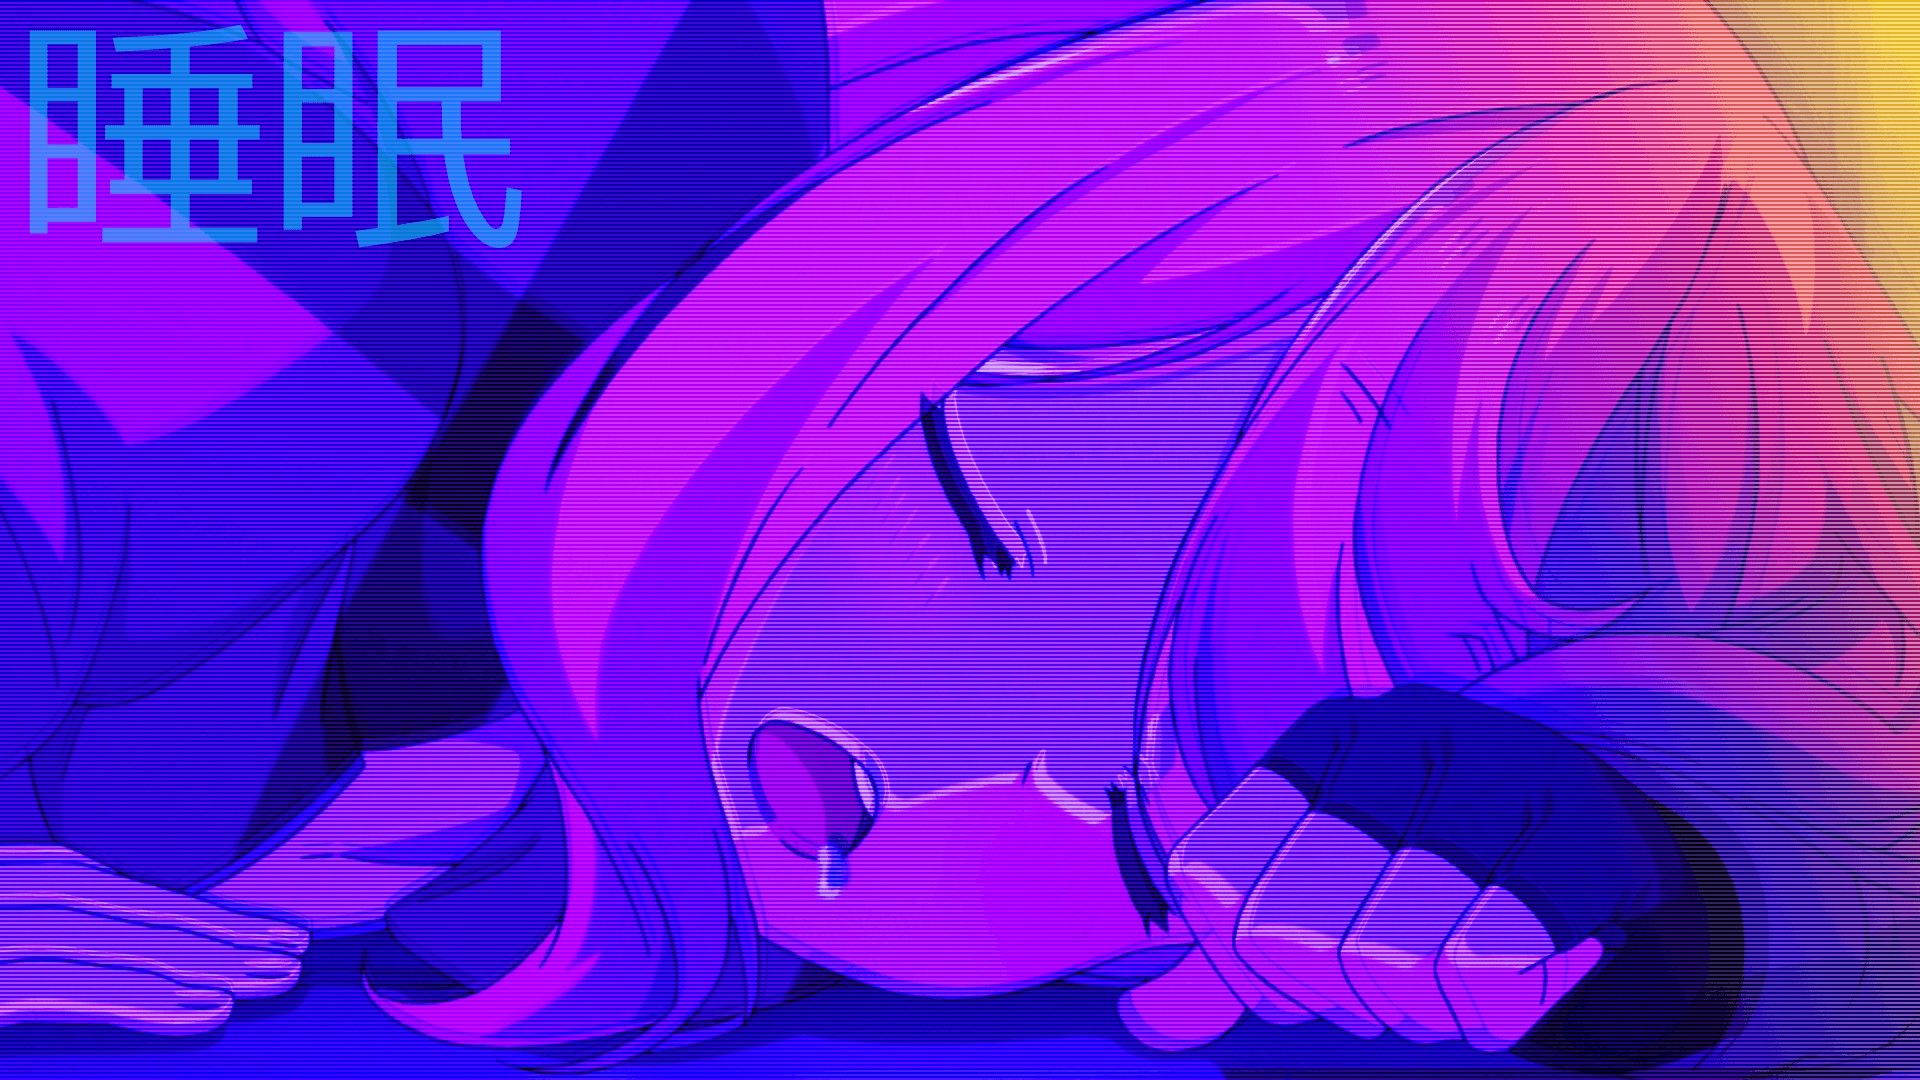 Free Purple Anime Aesthetic Wallpaper Downloads, Purple Anime Aesthetic Wallpaper for FREE